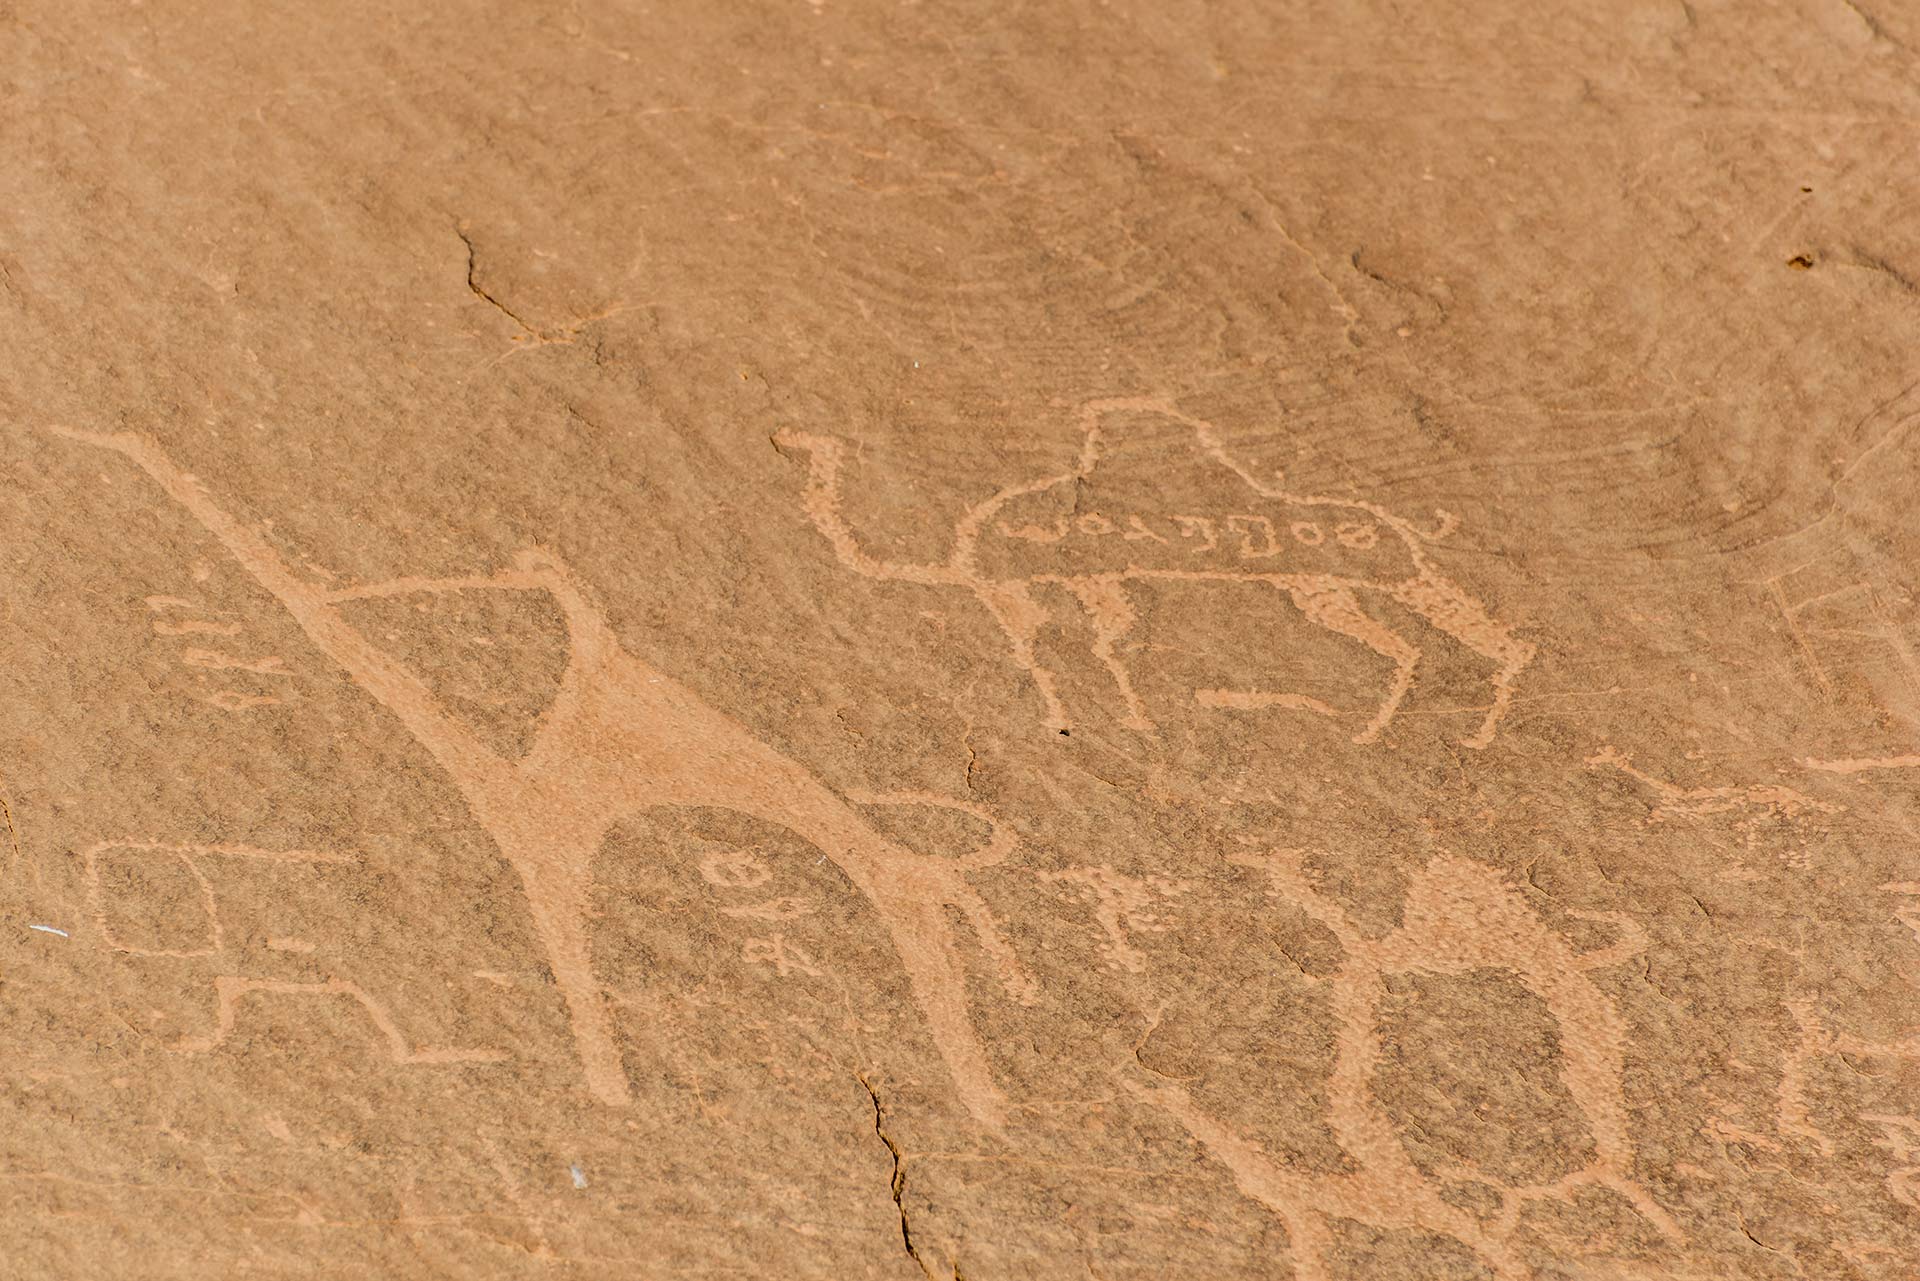 Alameleh Petroglyphen